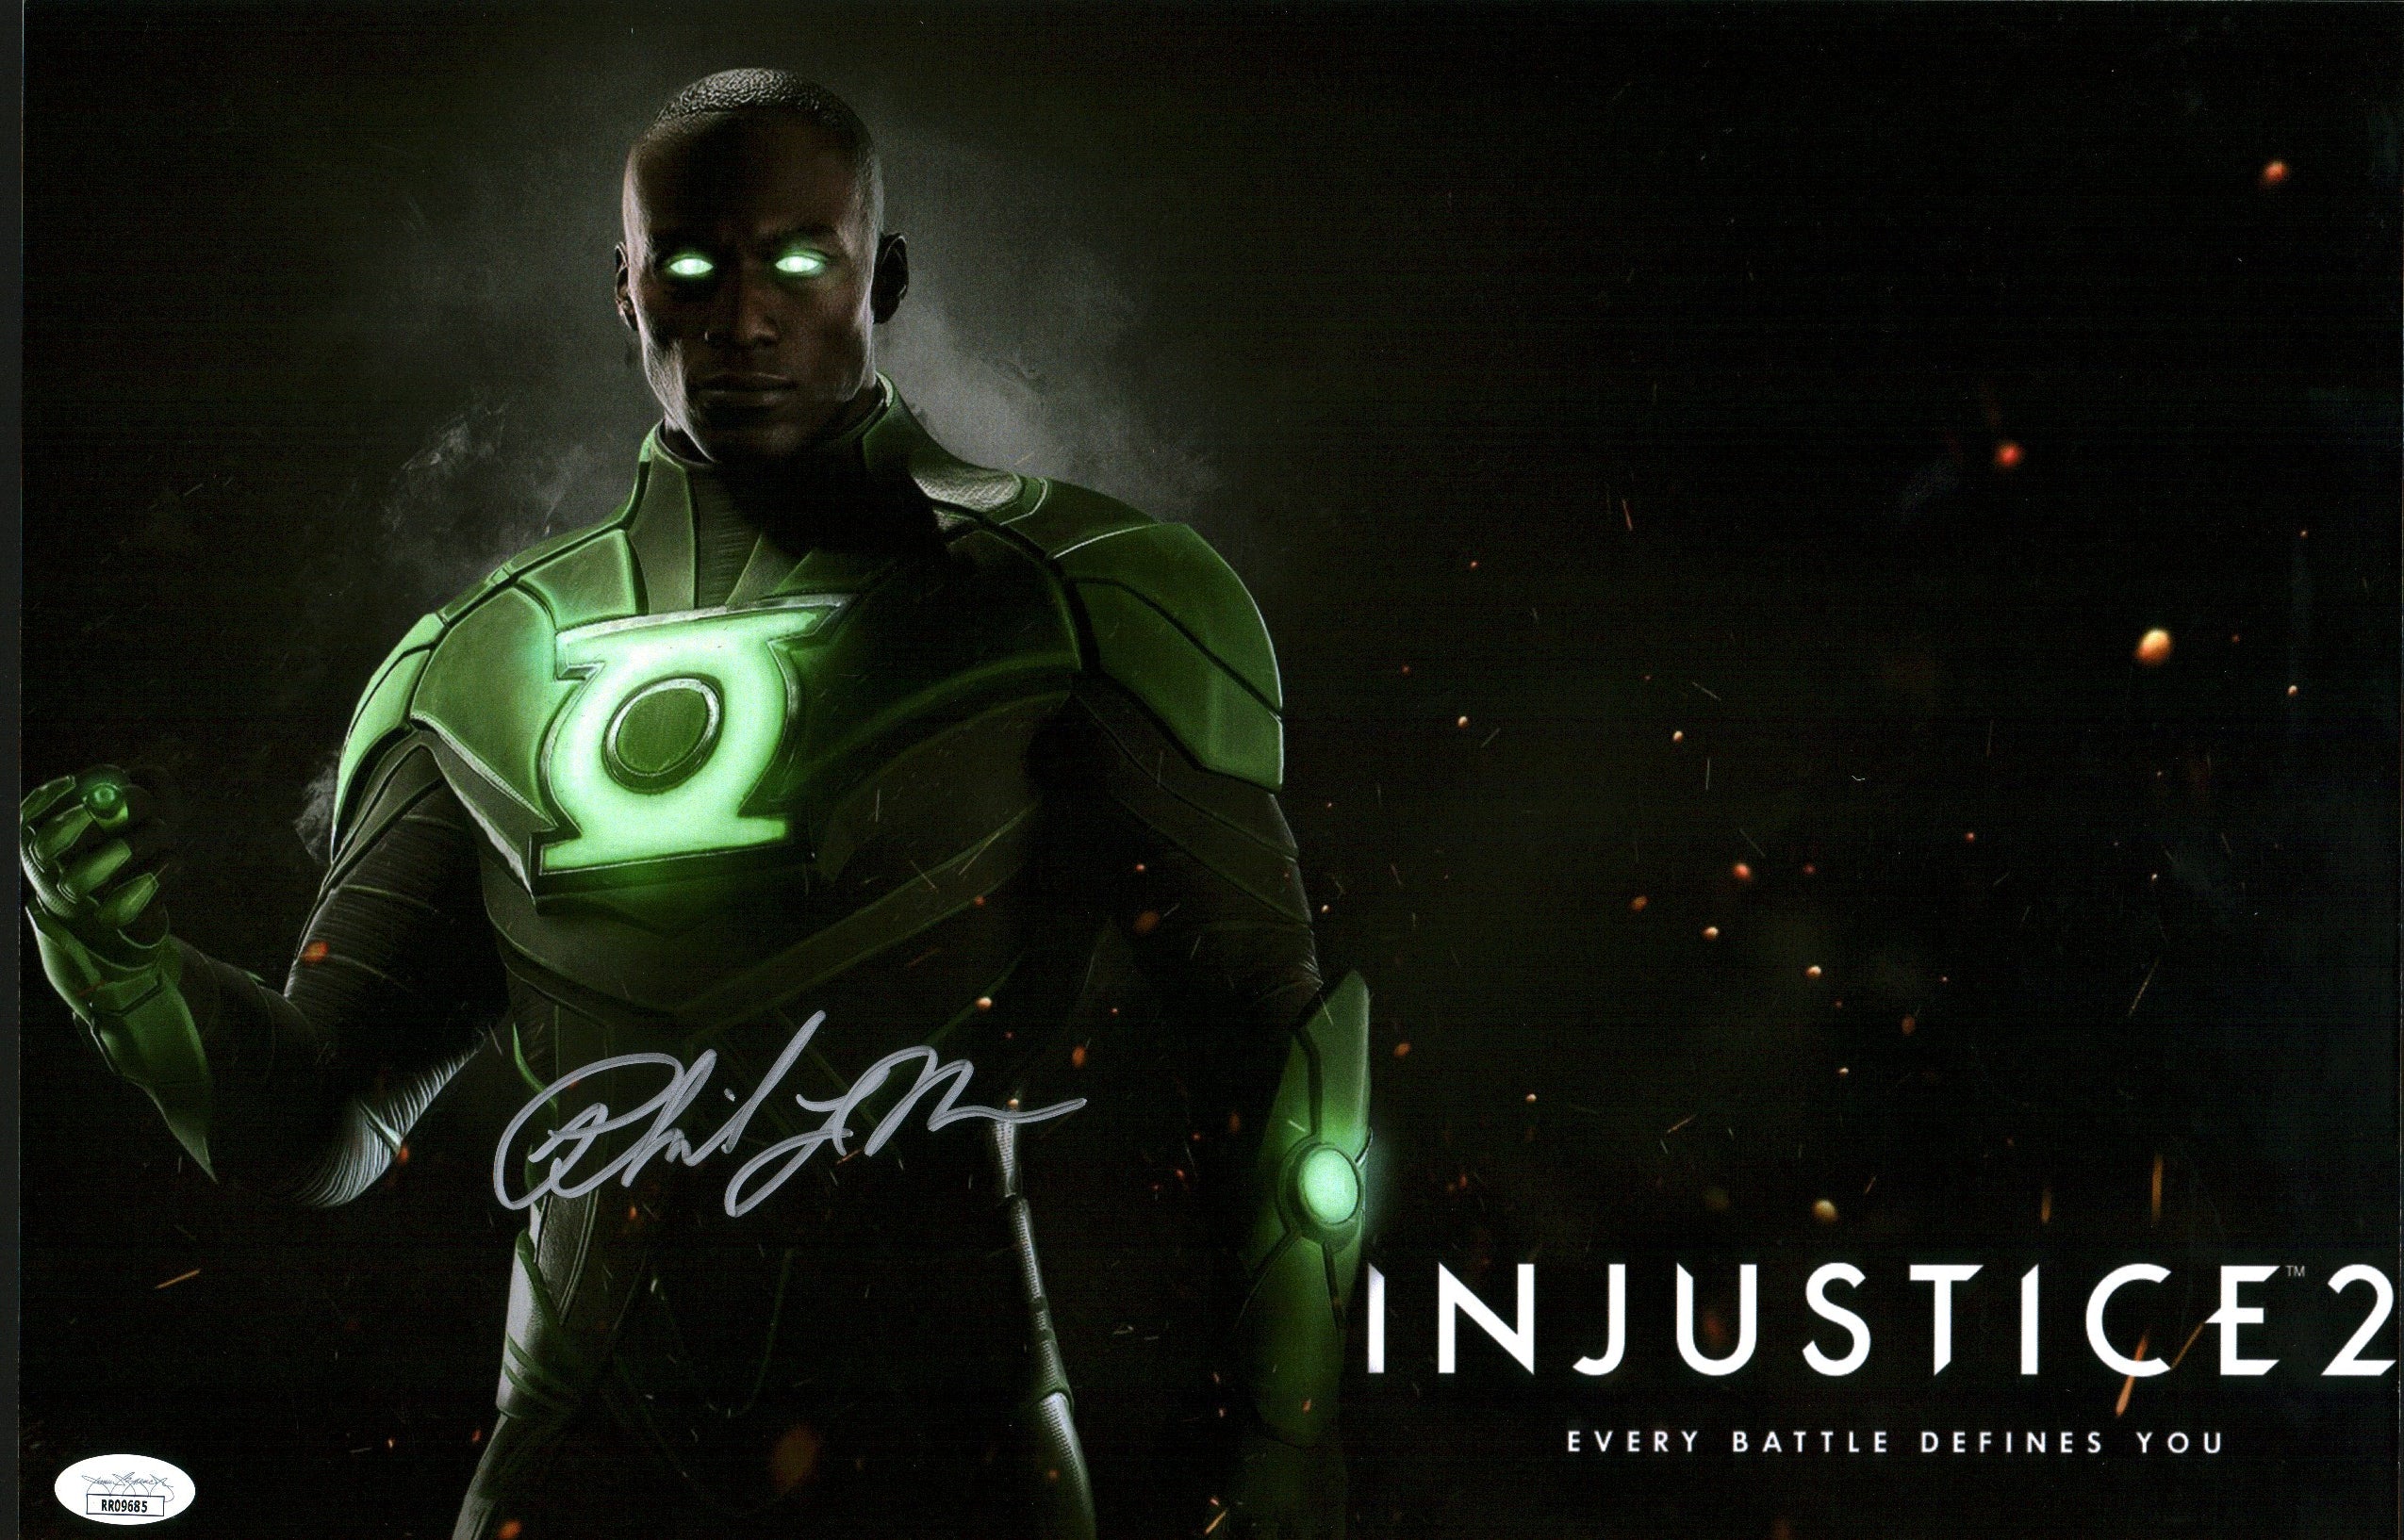 Phil LaMarr Injustice Green Lantern 11X17 Photo Signed Autograph JSA Certified COA Auto